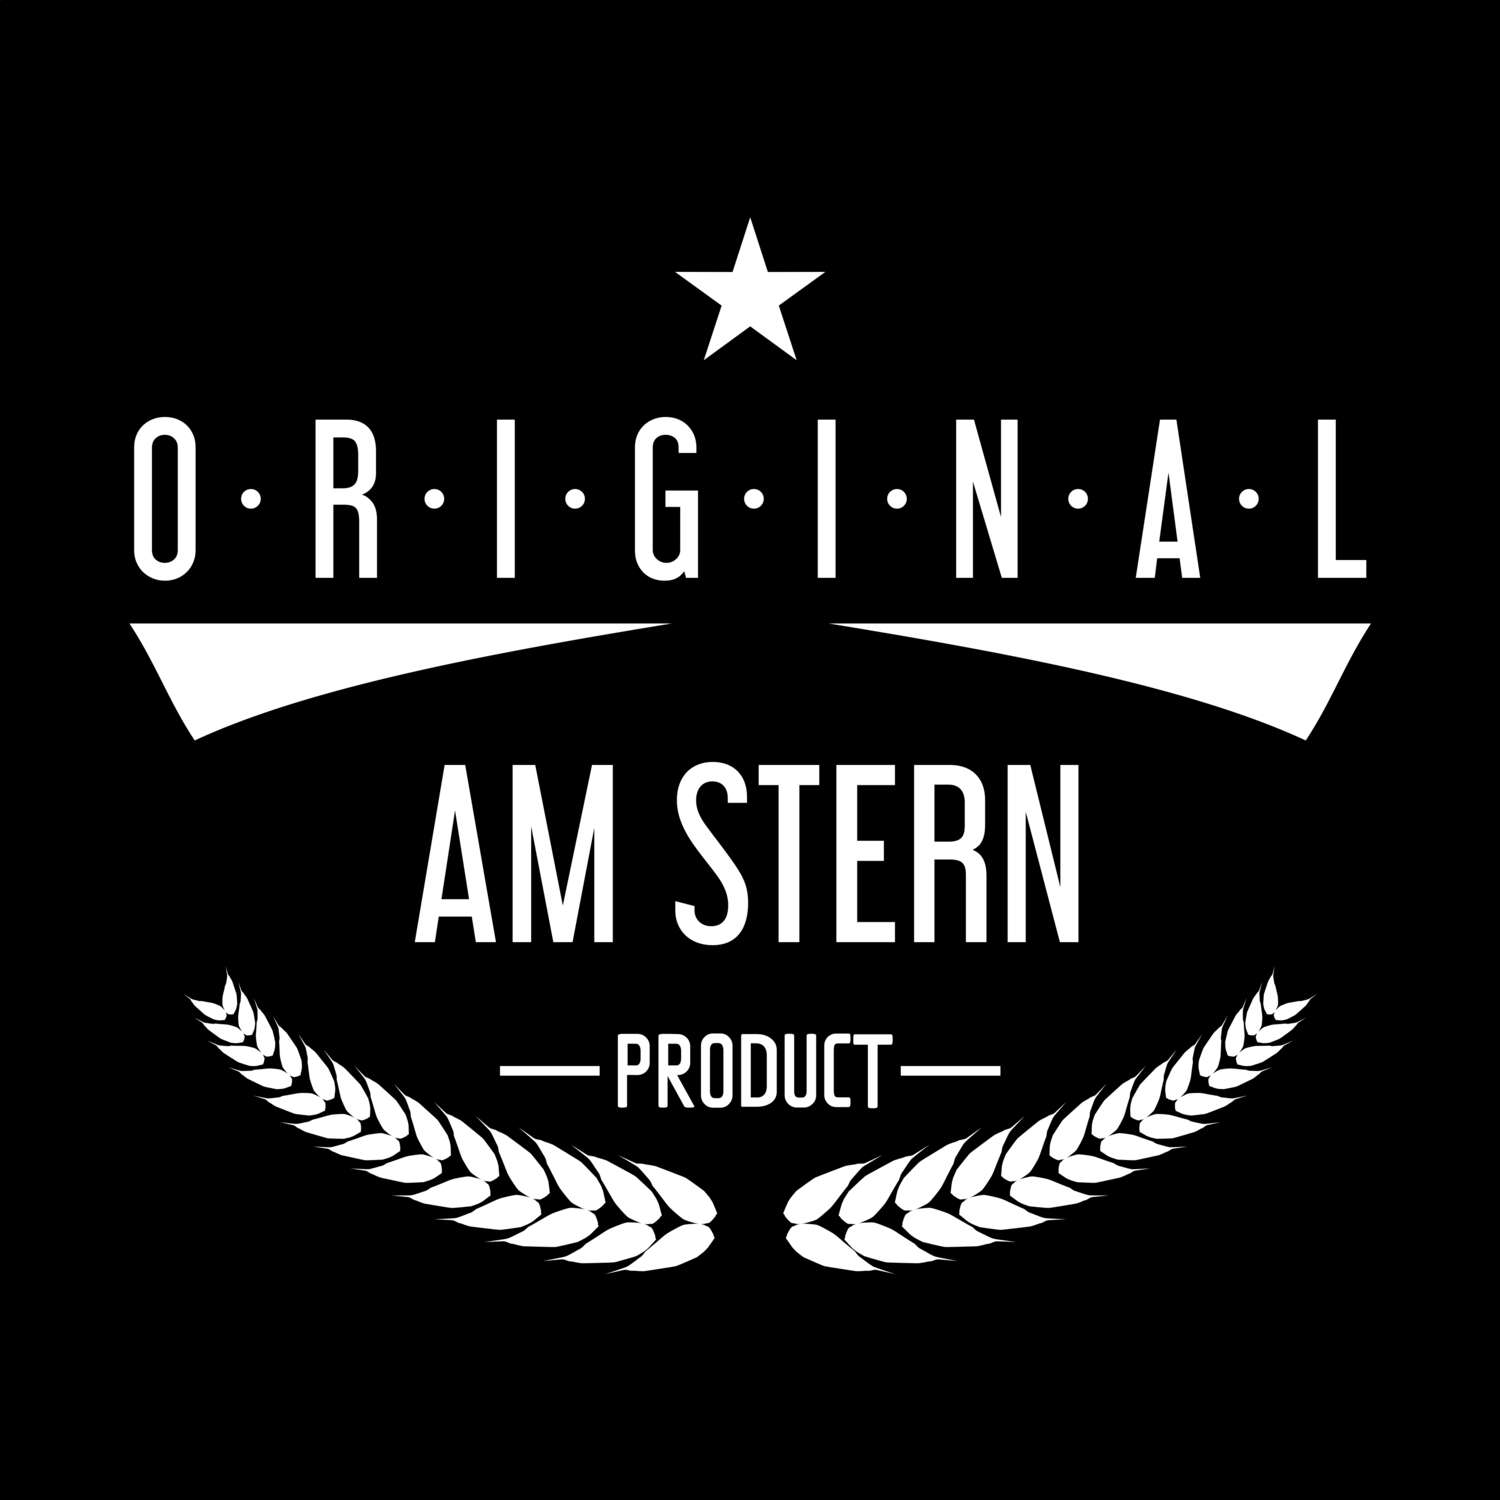 Am Stern T-Shirt »Original Product«